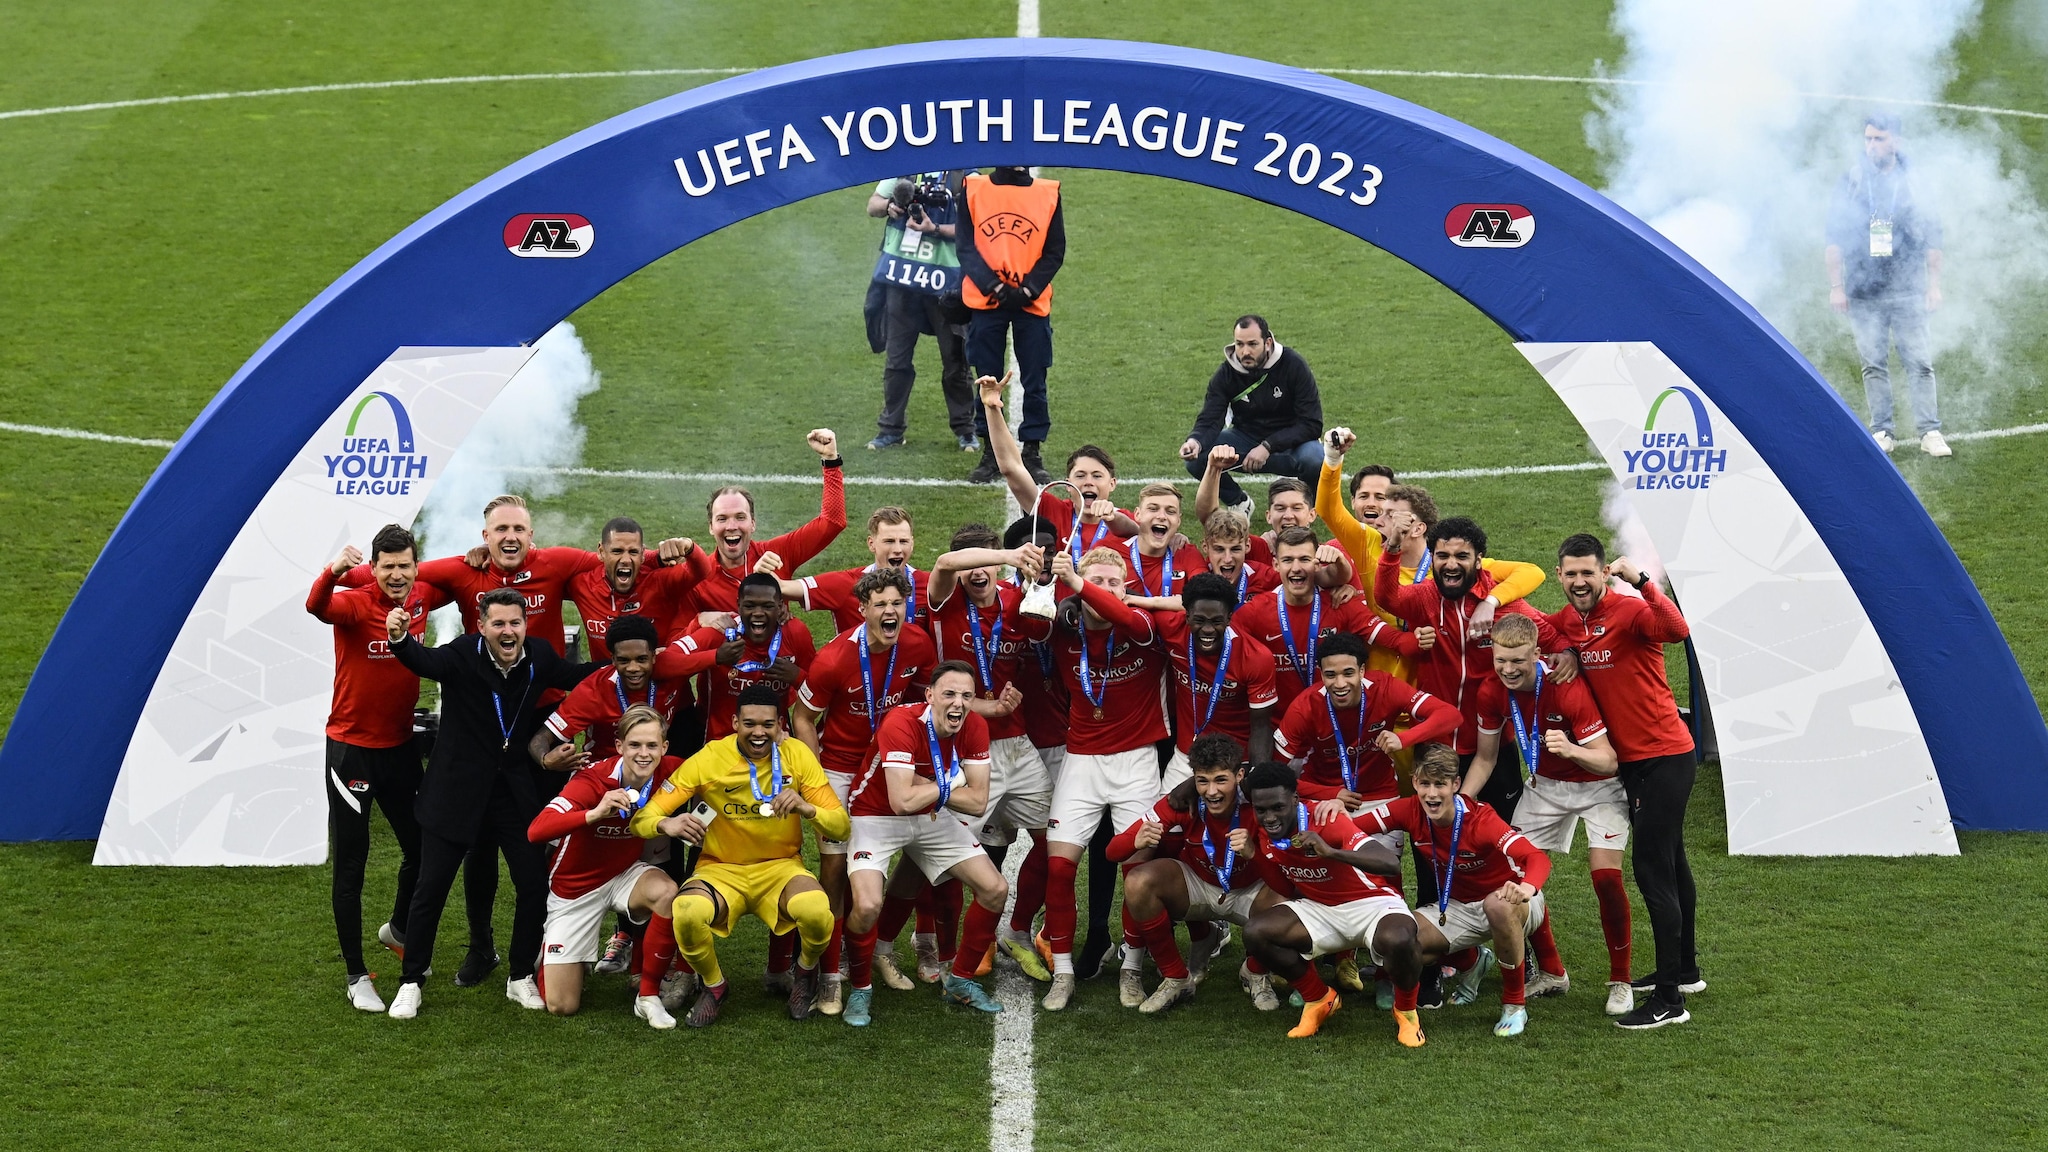 AZ Alkmaar U19 vs Hajduk Split U19 24.04.2023 at UEFA Youth League 2022/23, Football